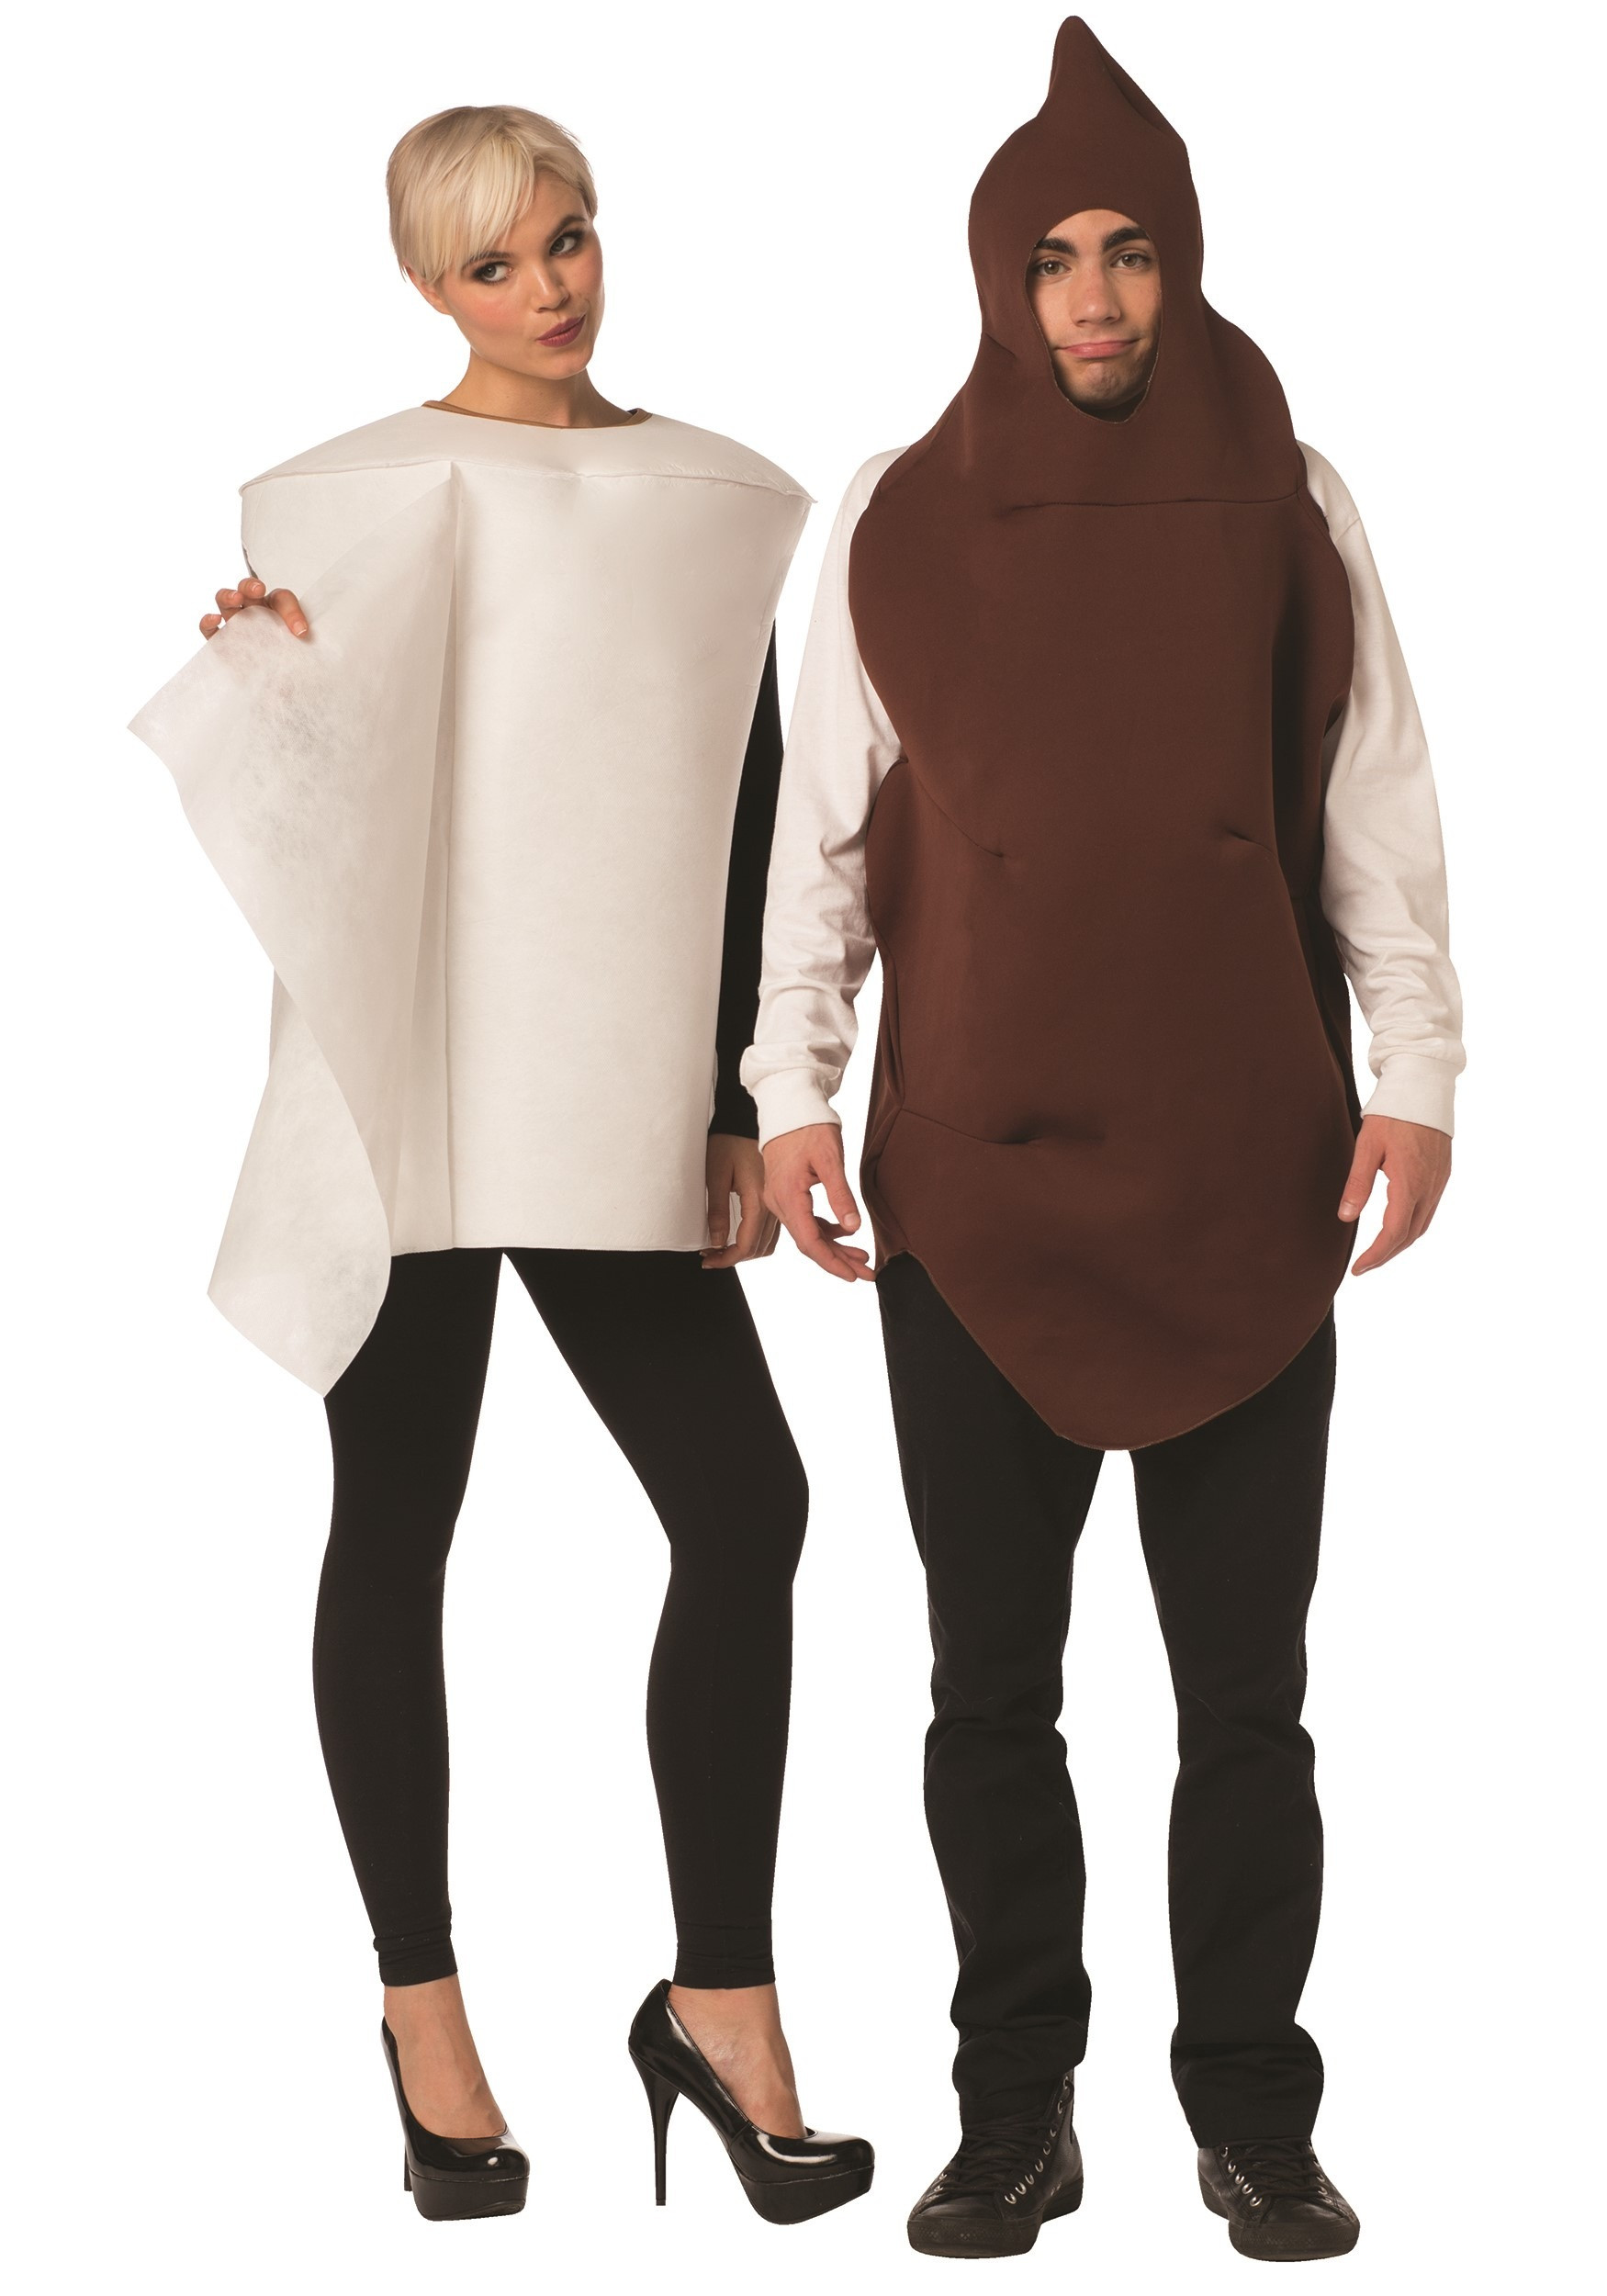 Toilet Halloween Costumes
 Couple s Funny Poop & Toilet Paper Costume